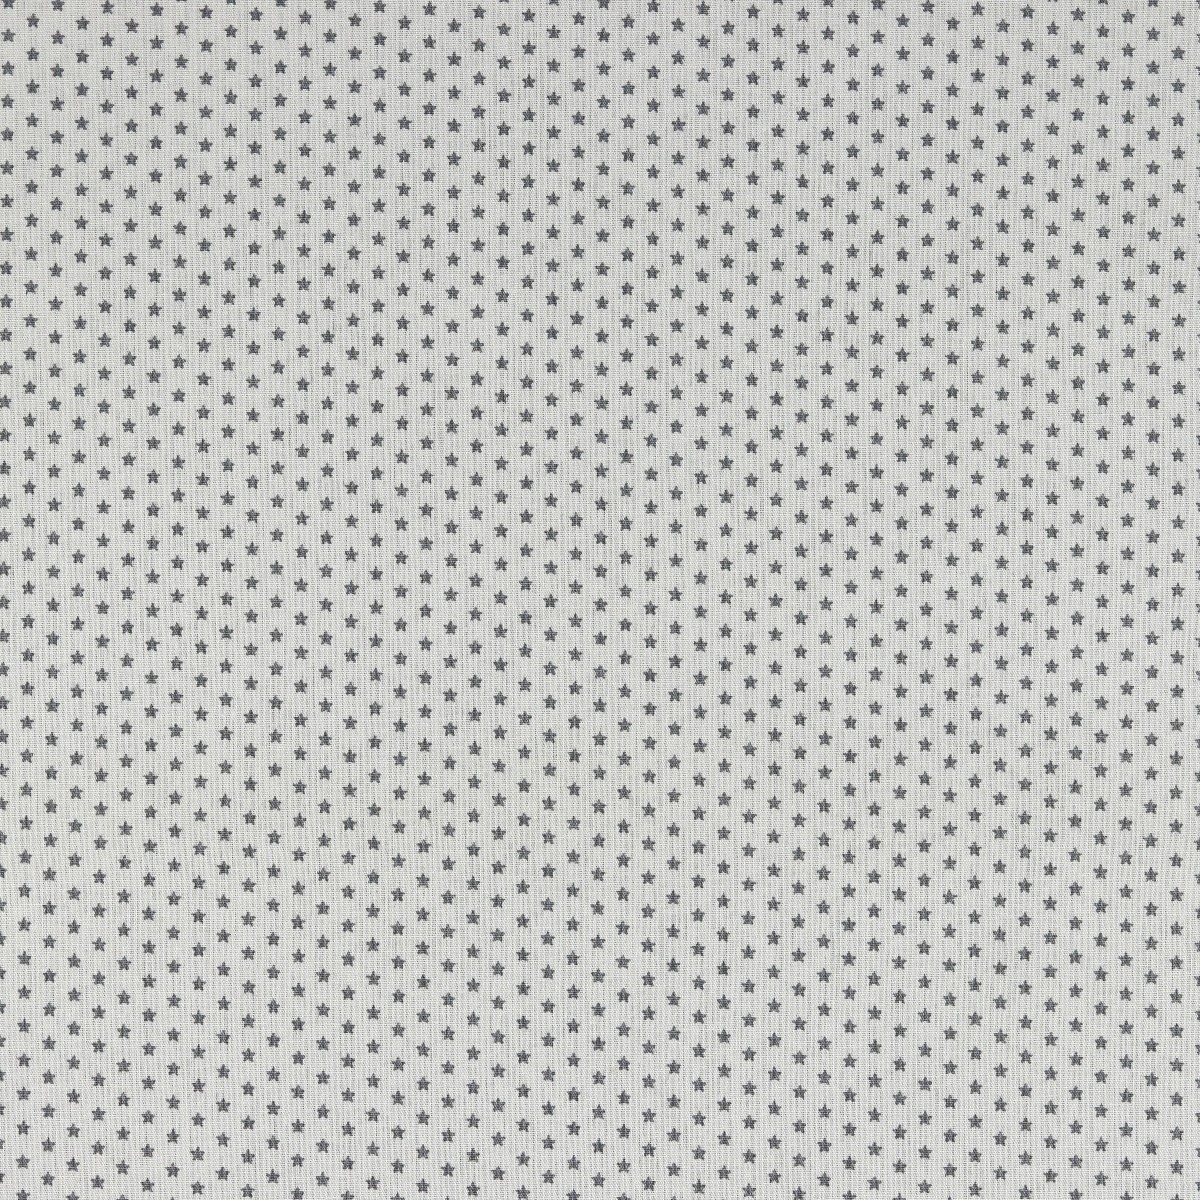 Baumwolle Mini Stars Weiß/Grau